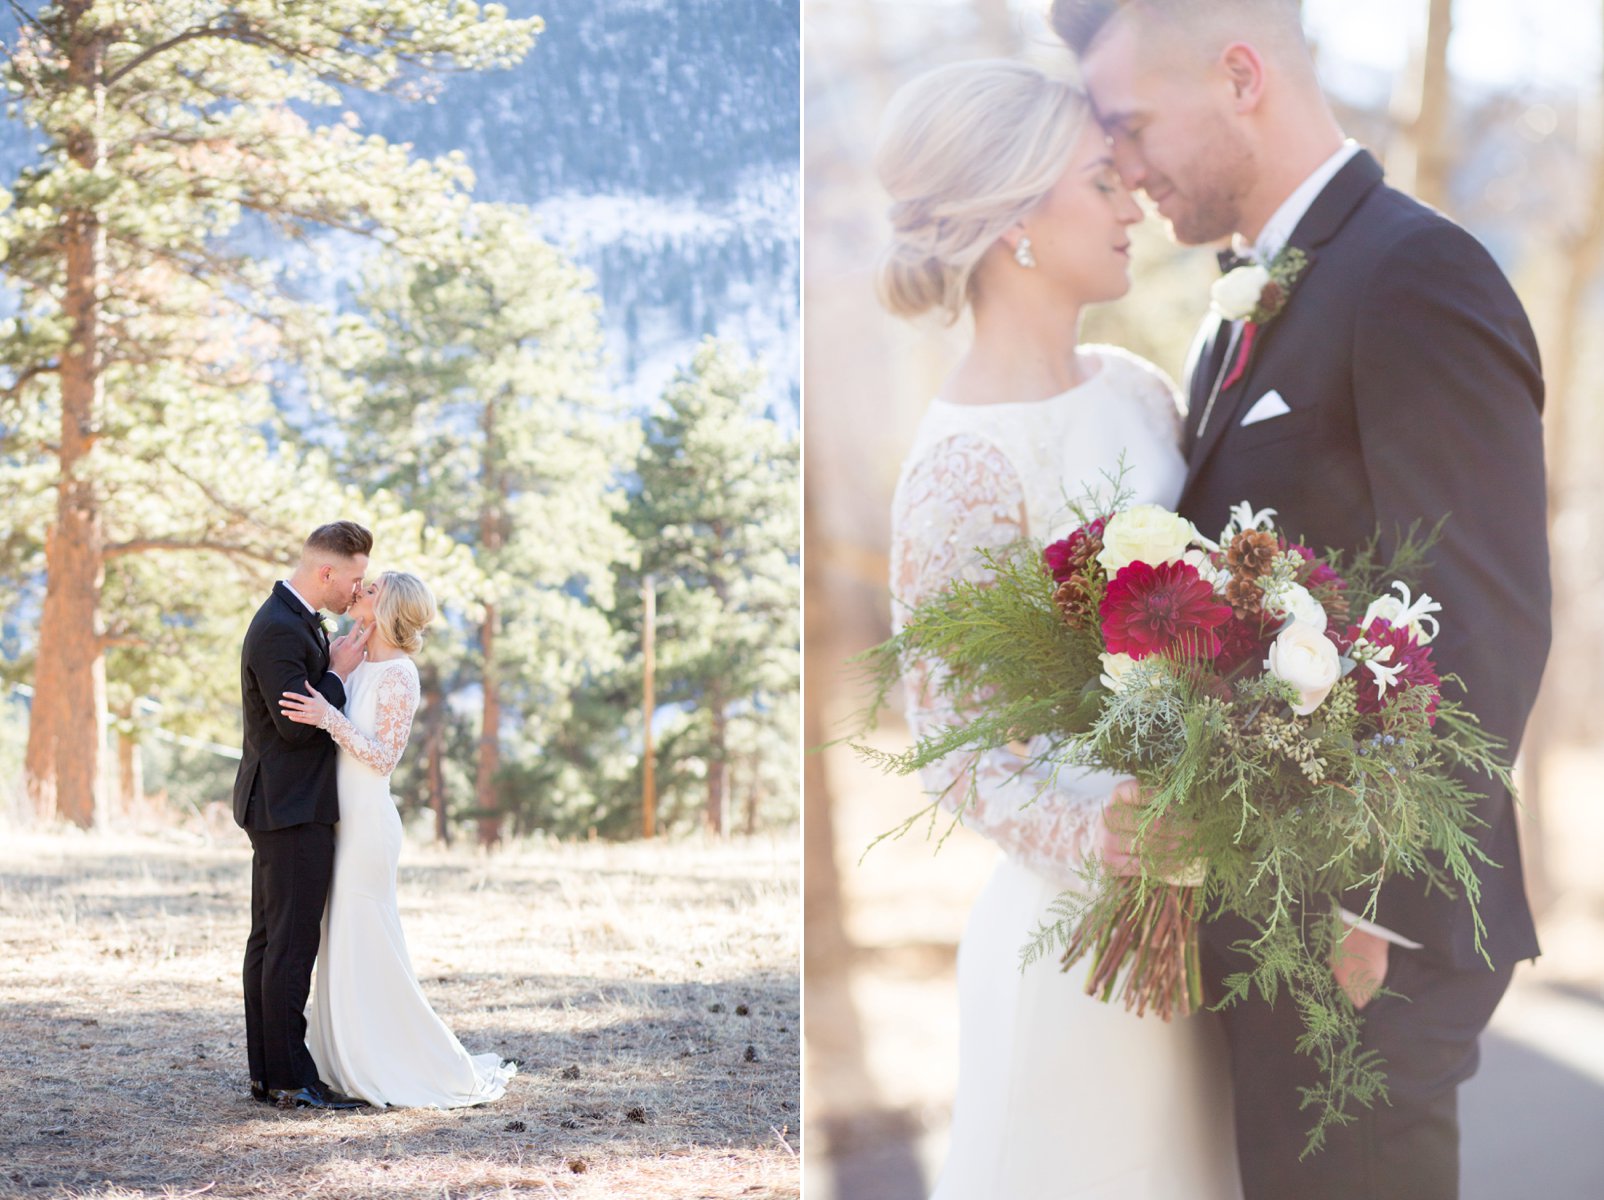 bride & groom in rocky mountain national park during colorado winter wedding